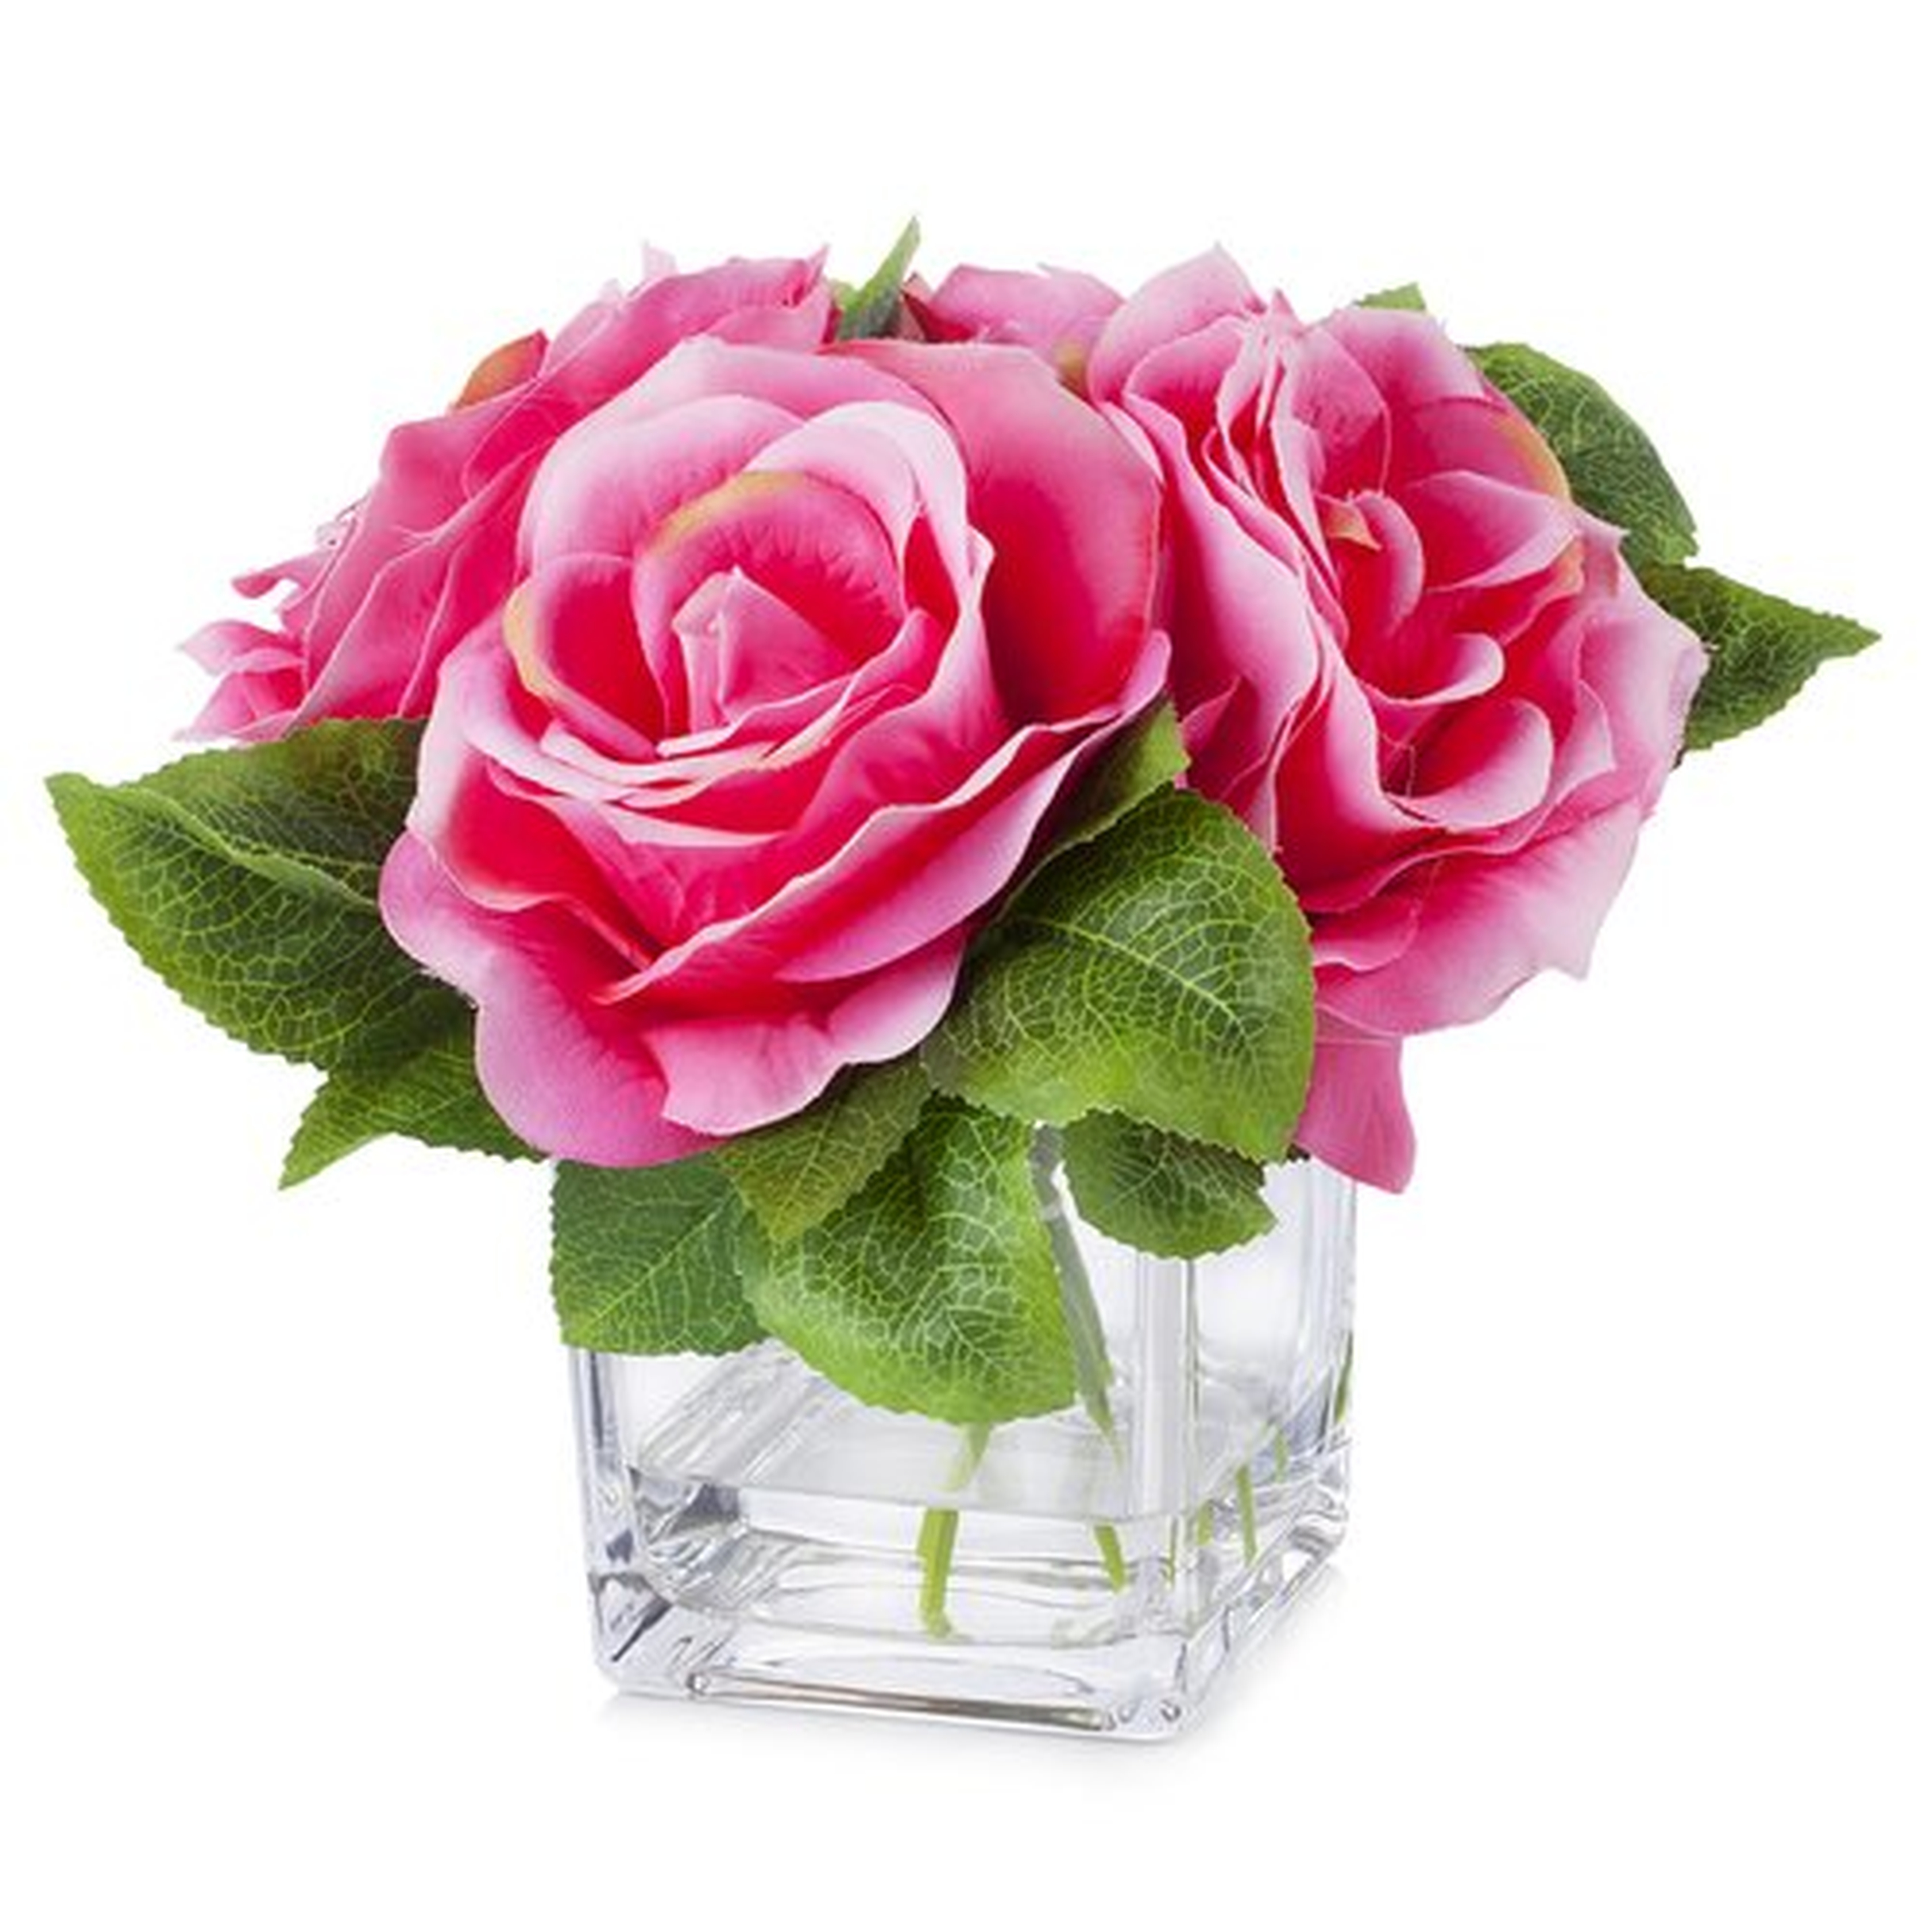 Velvet Roses Floral Arrangement in Vase - Wayfair